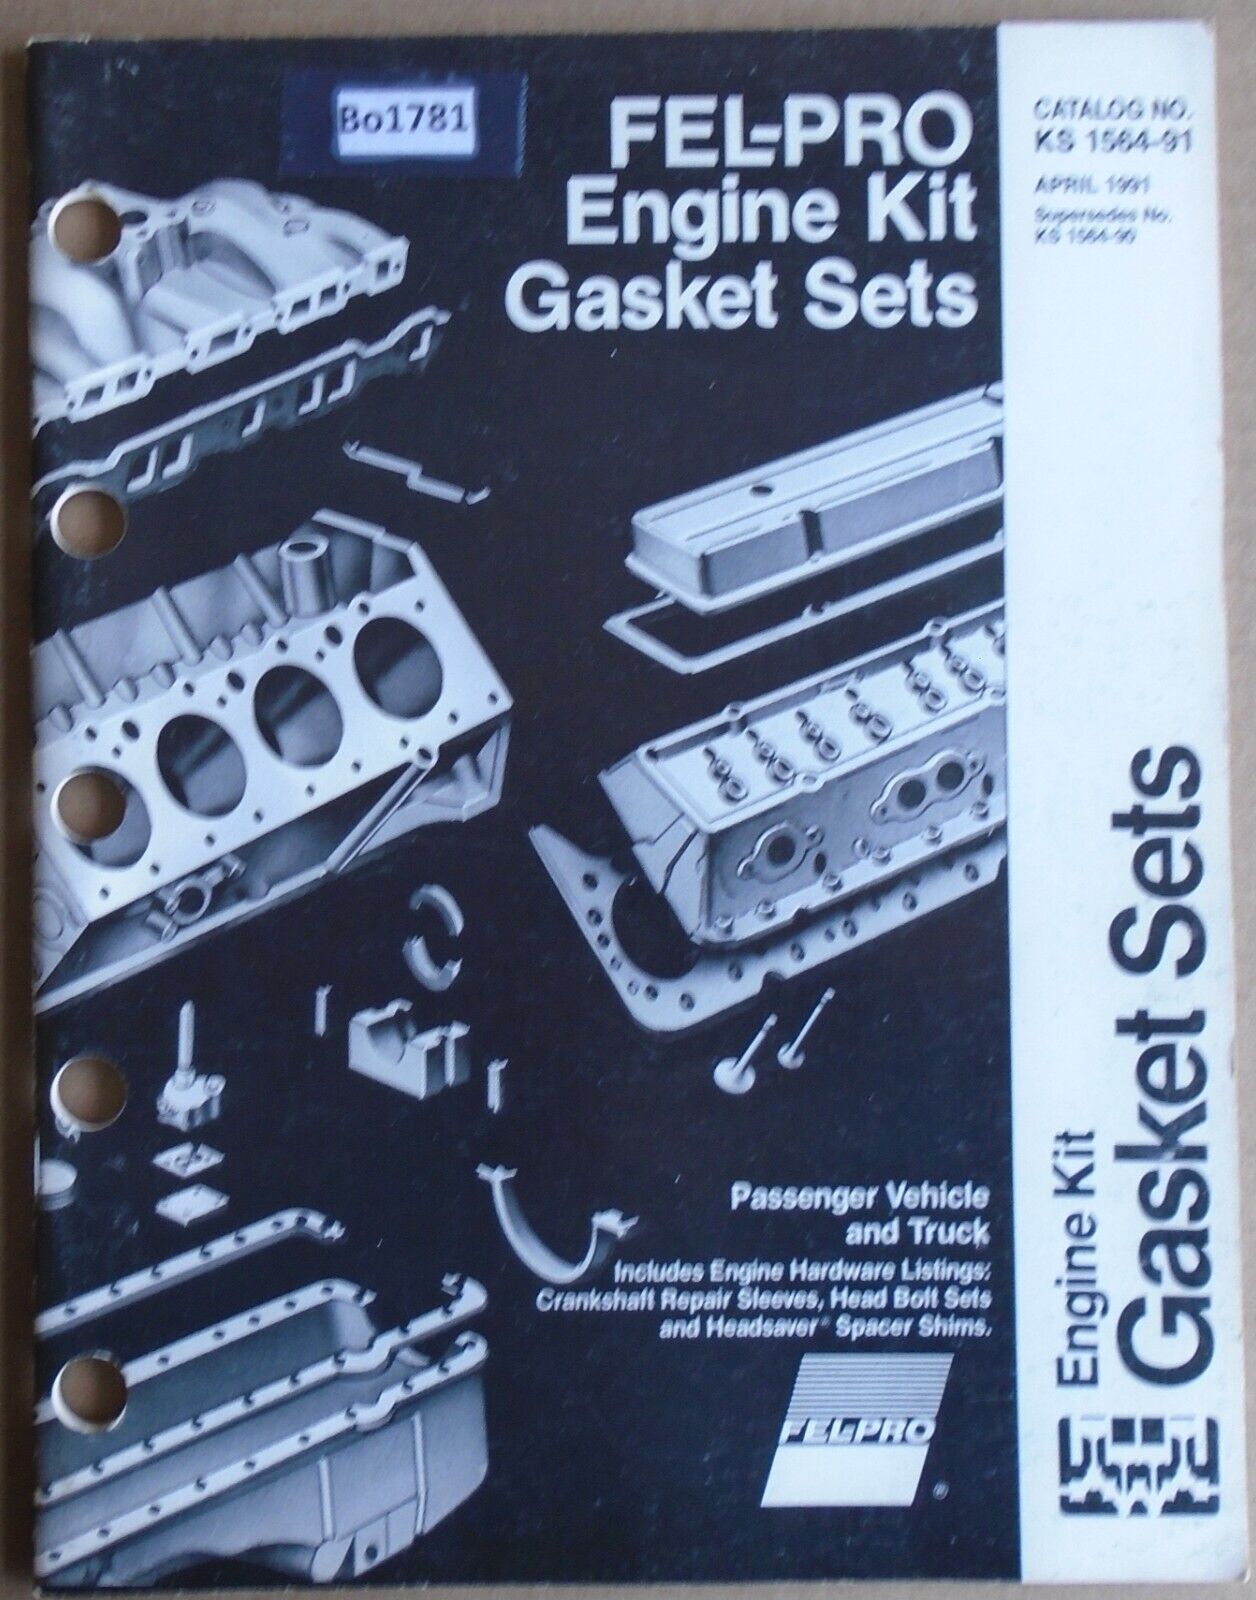 1991 Fel-Pro Engine Kit Gasket Sets Catalog No. KS 1564-91